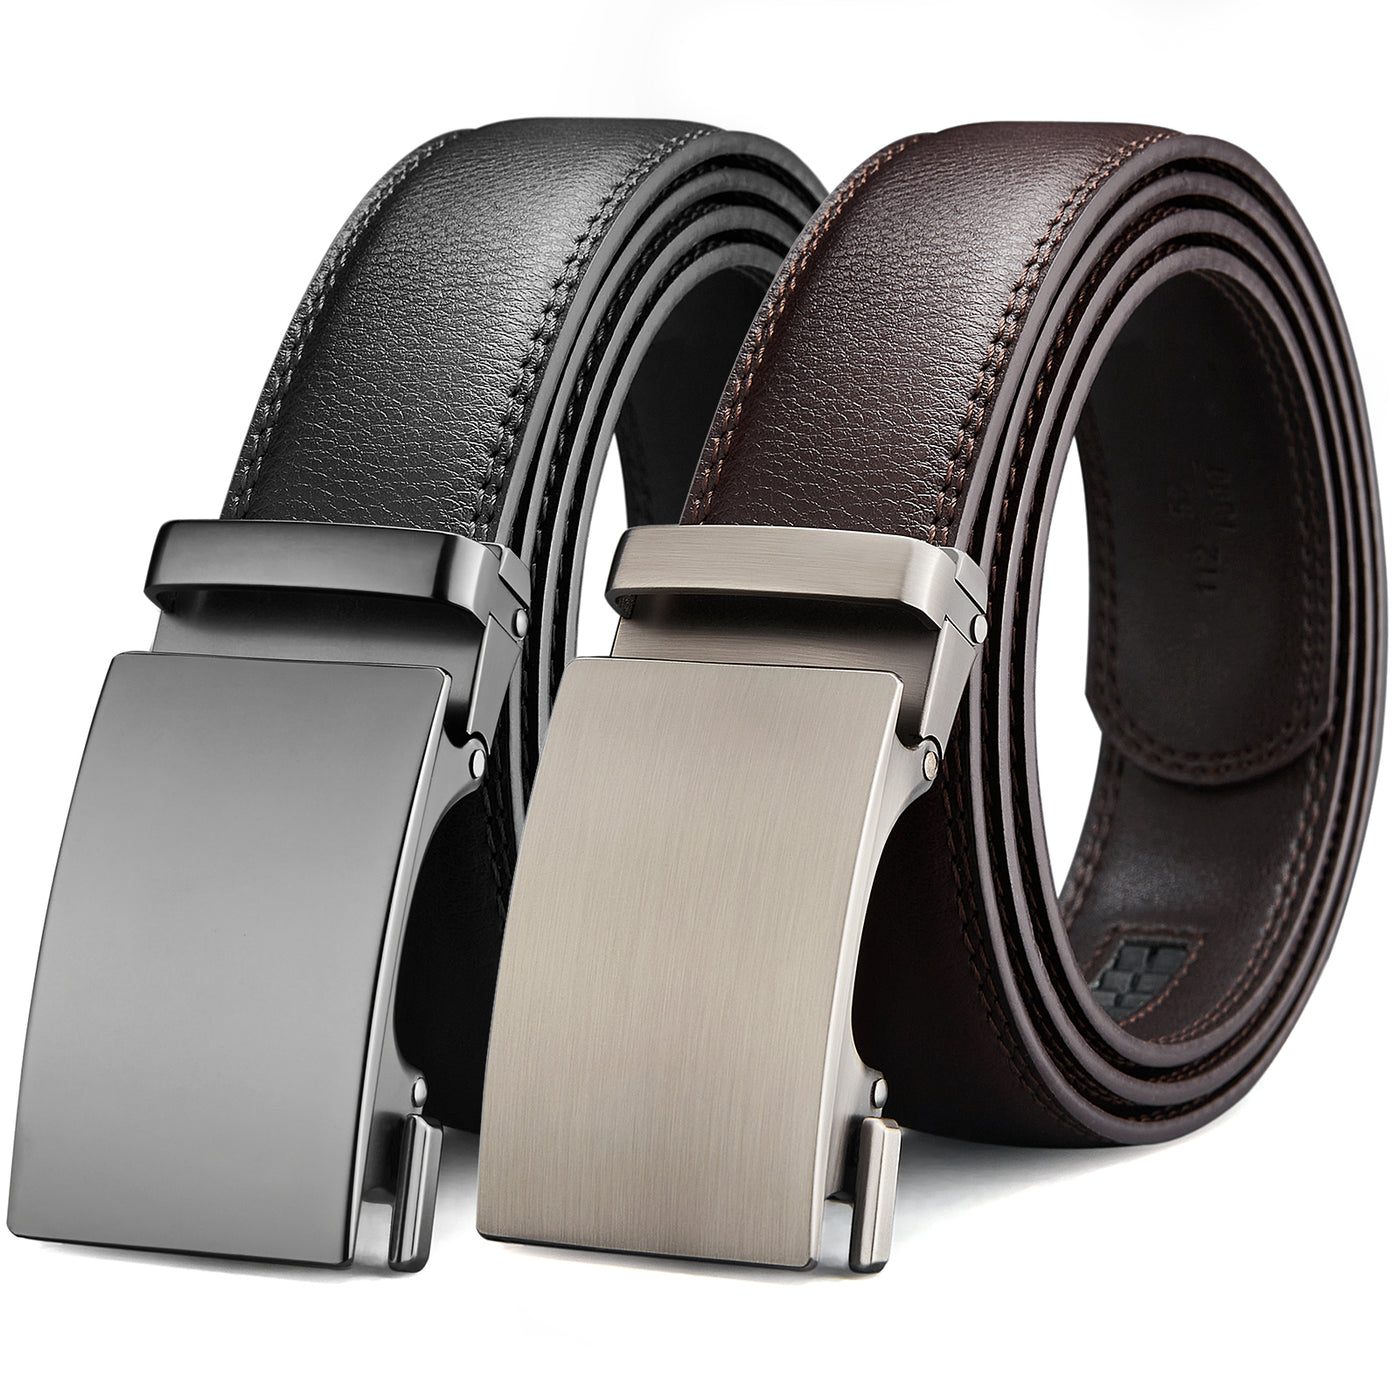 BOSTANTEN Men's Ratchet Dress Belts 2 Packs, Genuine Leather Belts for